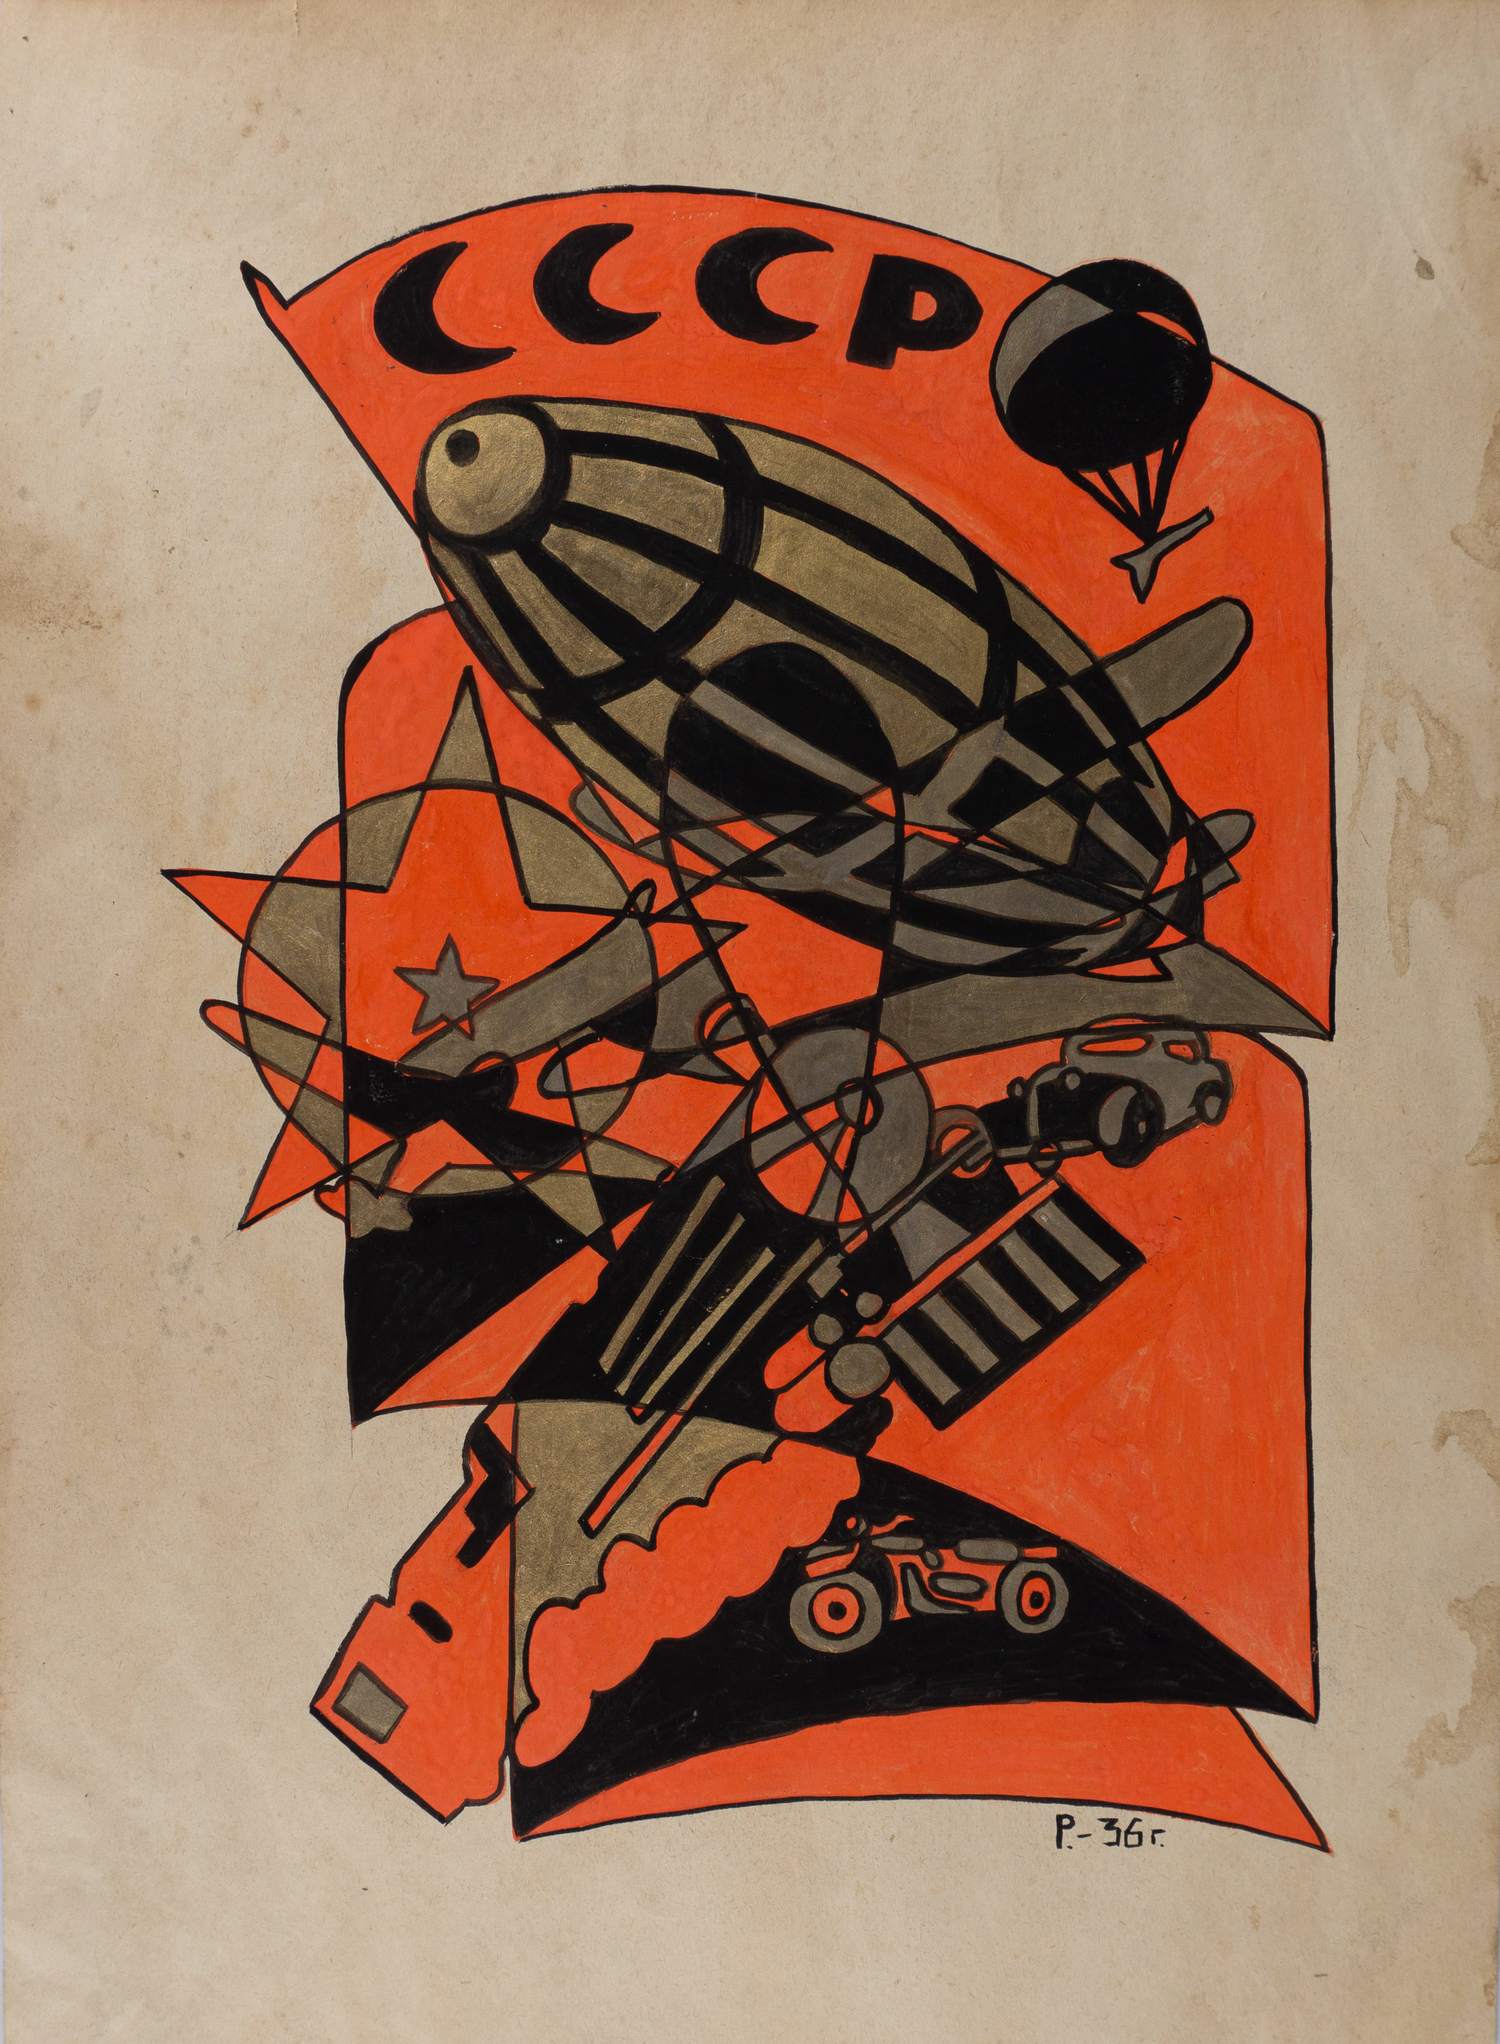 Неизвестный художник (Рабинович Розалия по подписи). Композиция «СССР. Техника». 1936 (?).